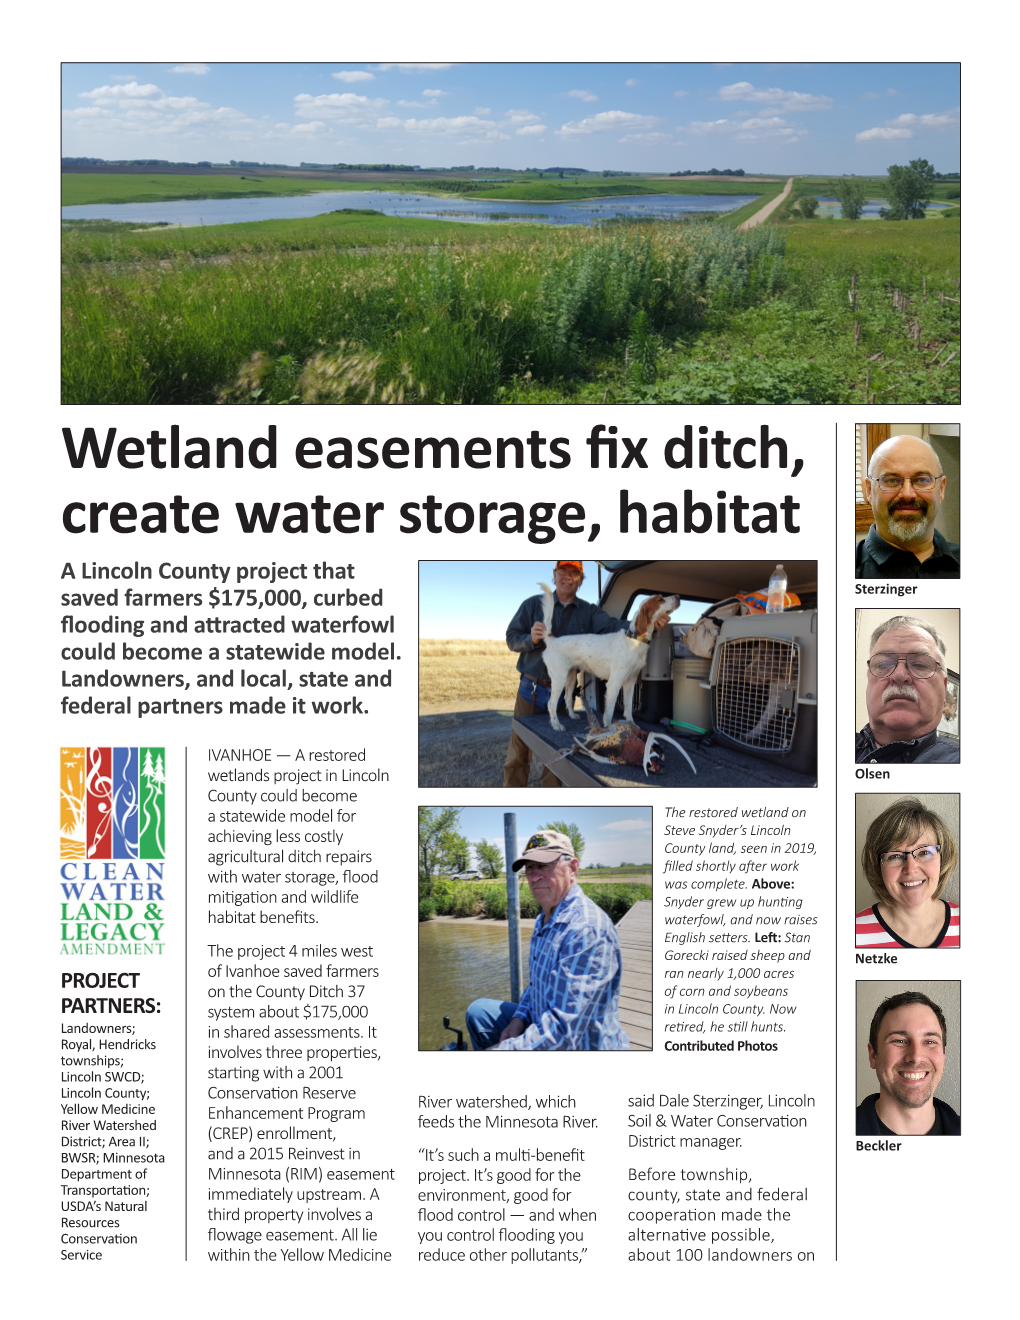 Wetland Easements Fix Ditch, Create Water Storage, Habitat